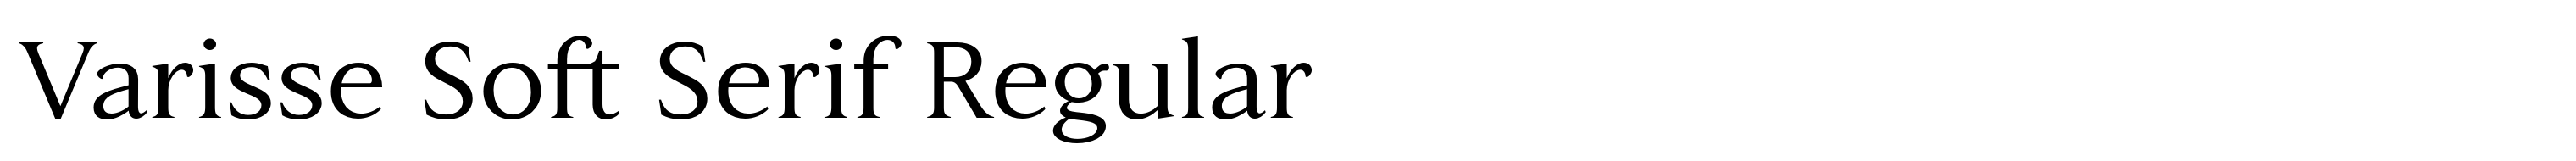 Varisse Soft Serif Regular